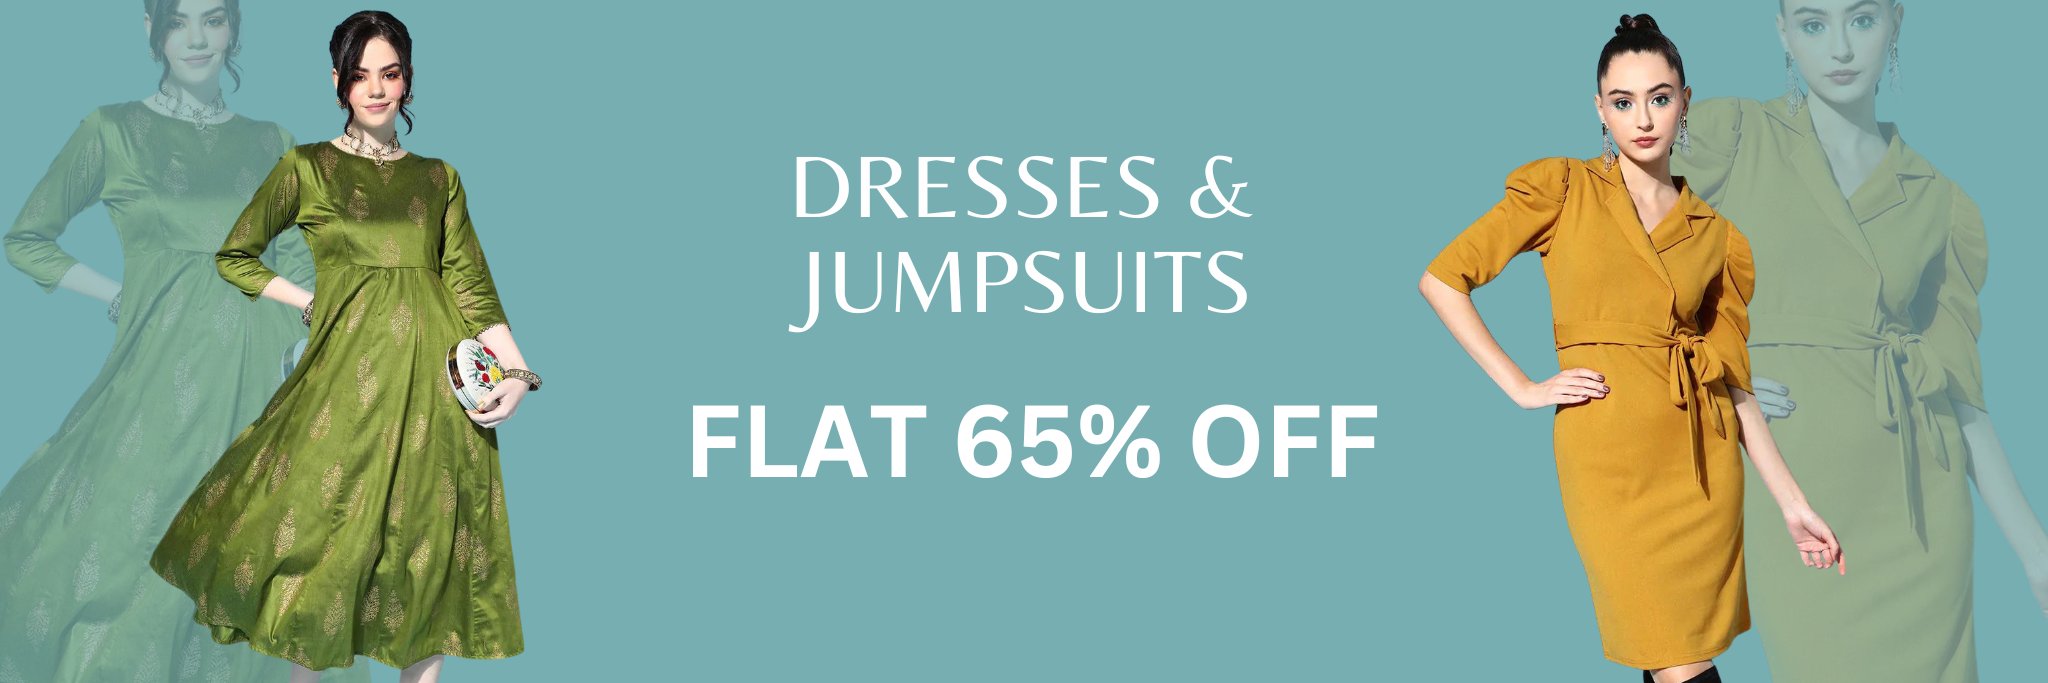 Dresses & Jumpsuits - Min 65% Off